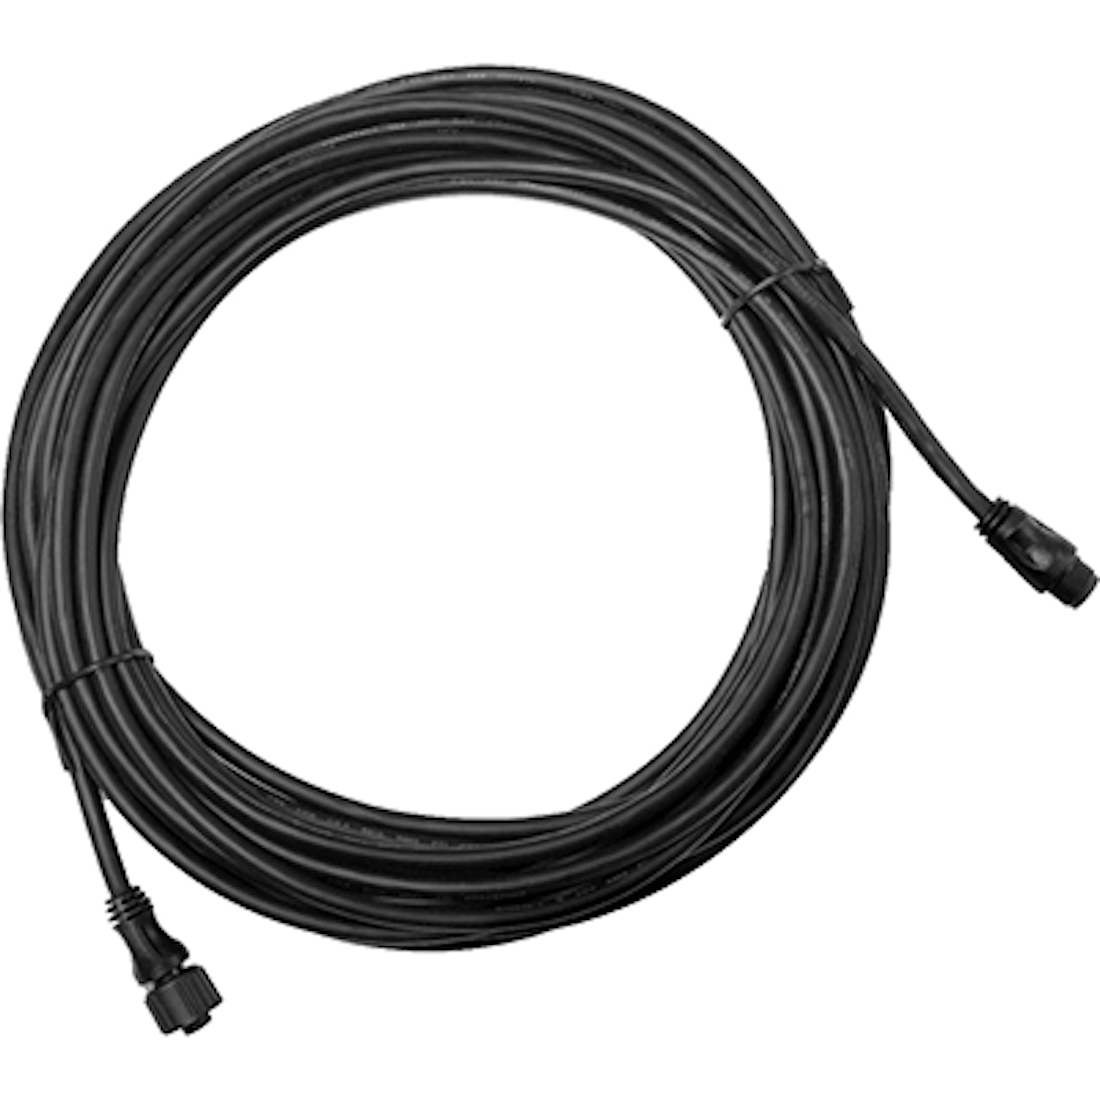 Garmin NMEA 2000 Backbone Cable (10M) [010-11076-02]